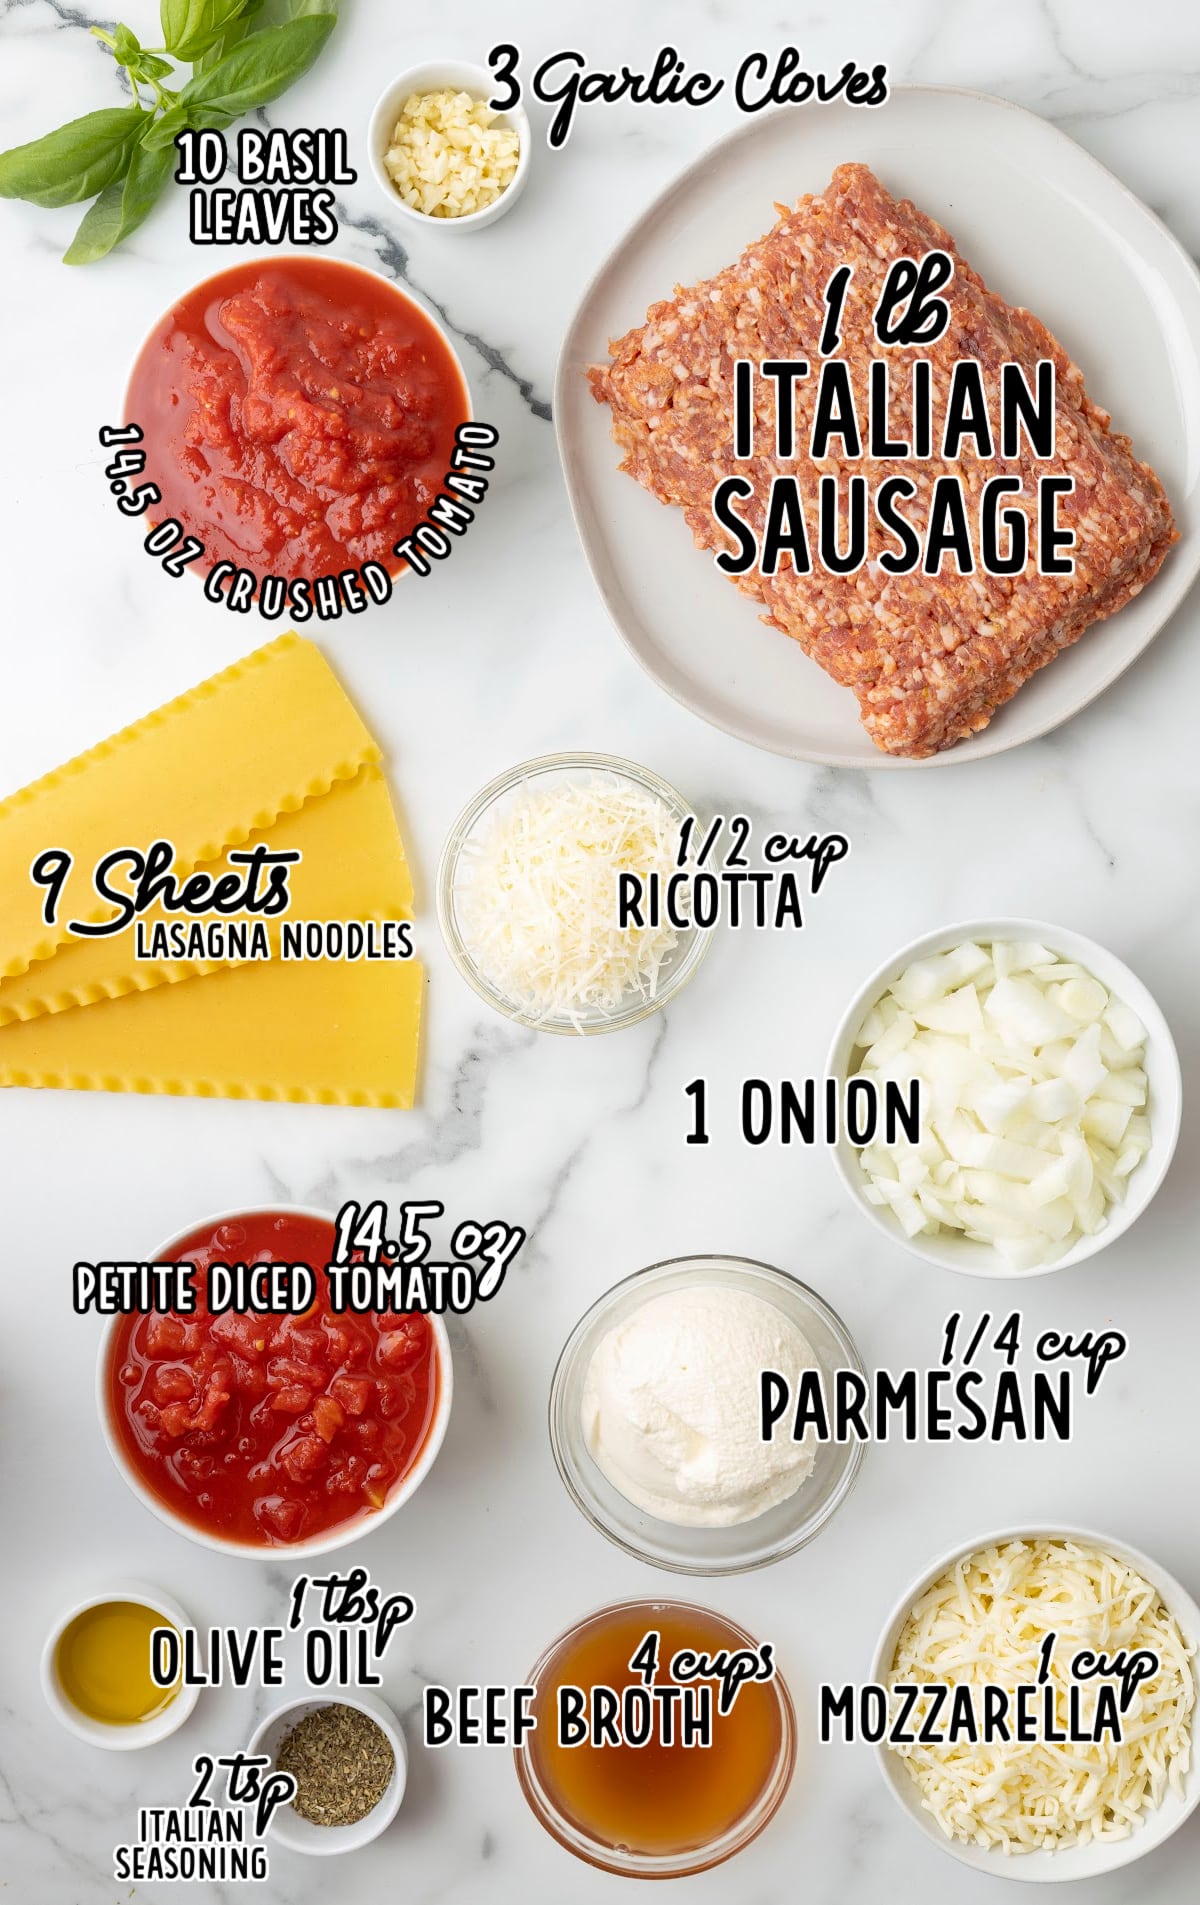 Lasagna Soup | Dinner | The Best Blog Recipes